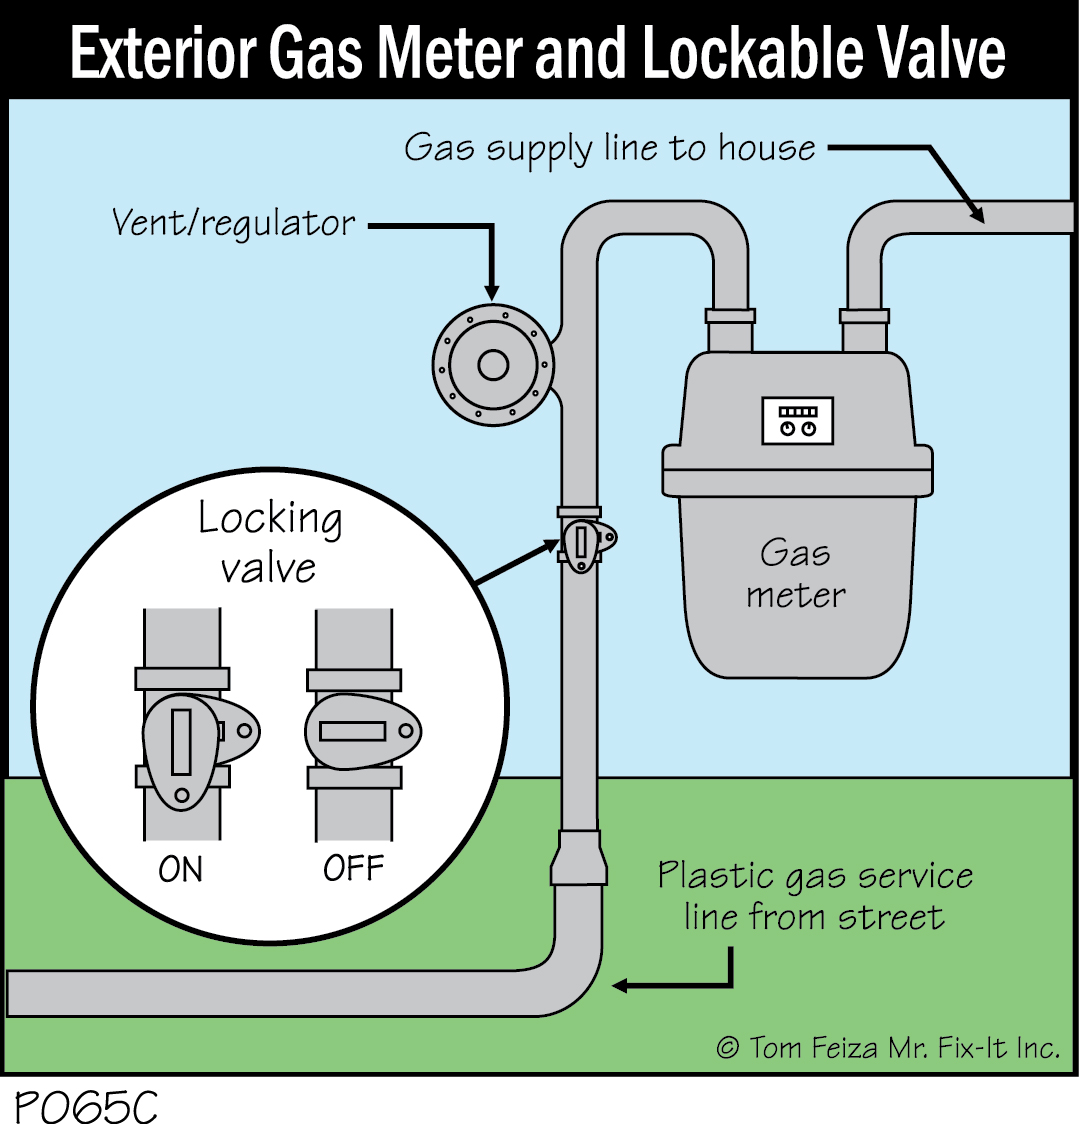 P065C - Exterior Gas Meter and Lockable Valve